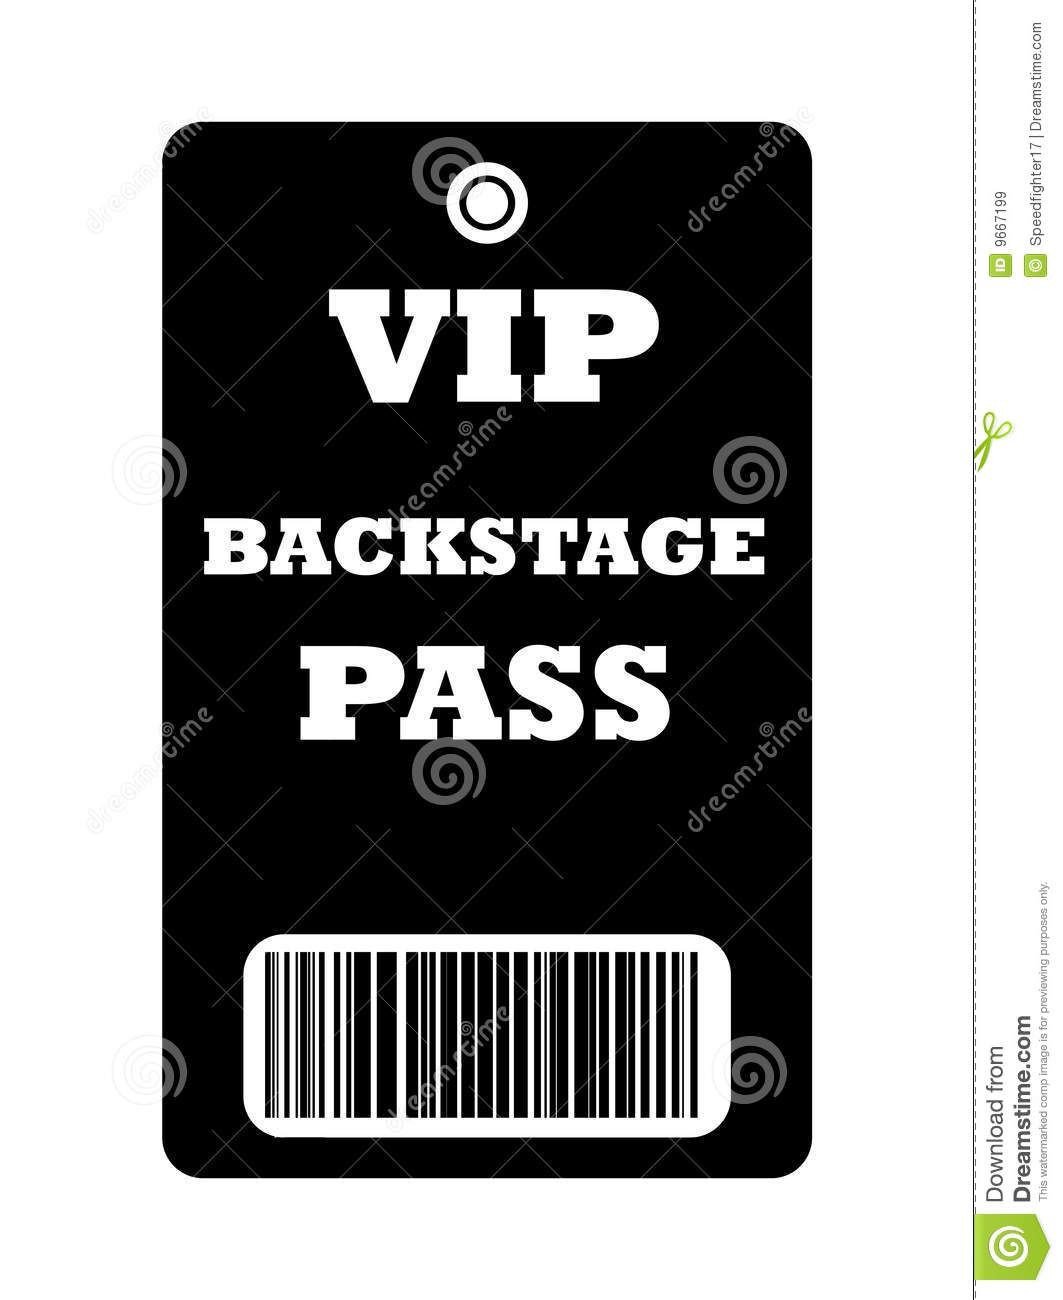 Free Printable Vip Pass Template Image Result for Vip Backstage Pass Vinyl Vip